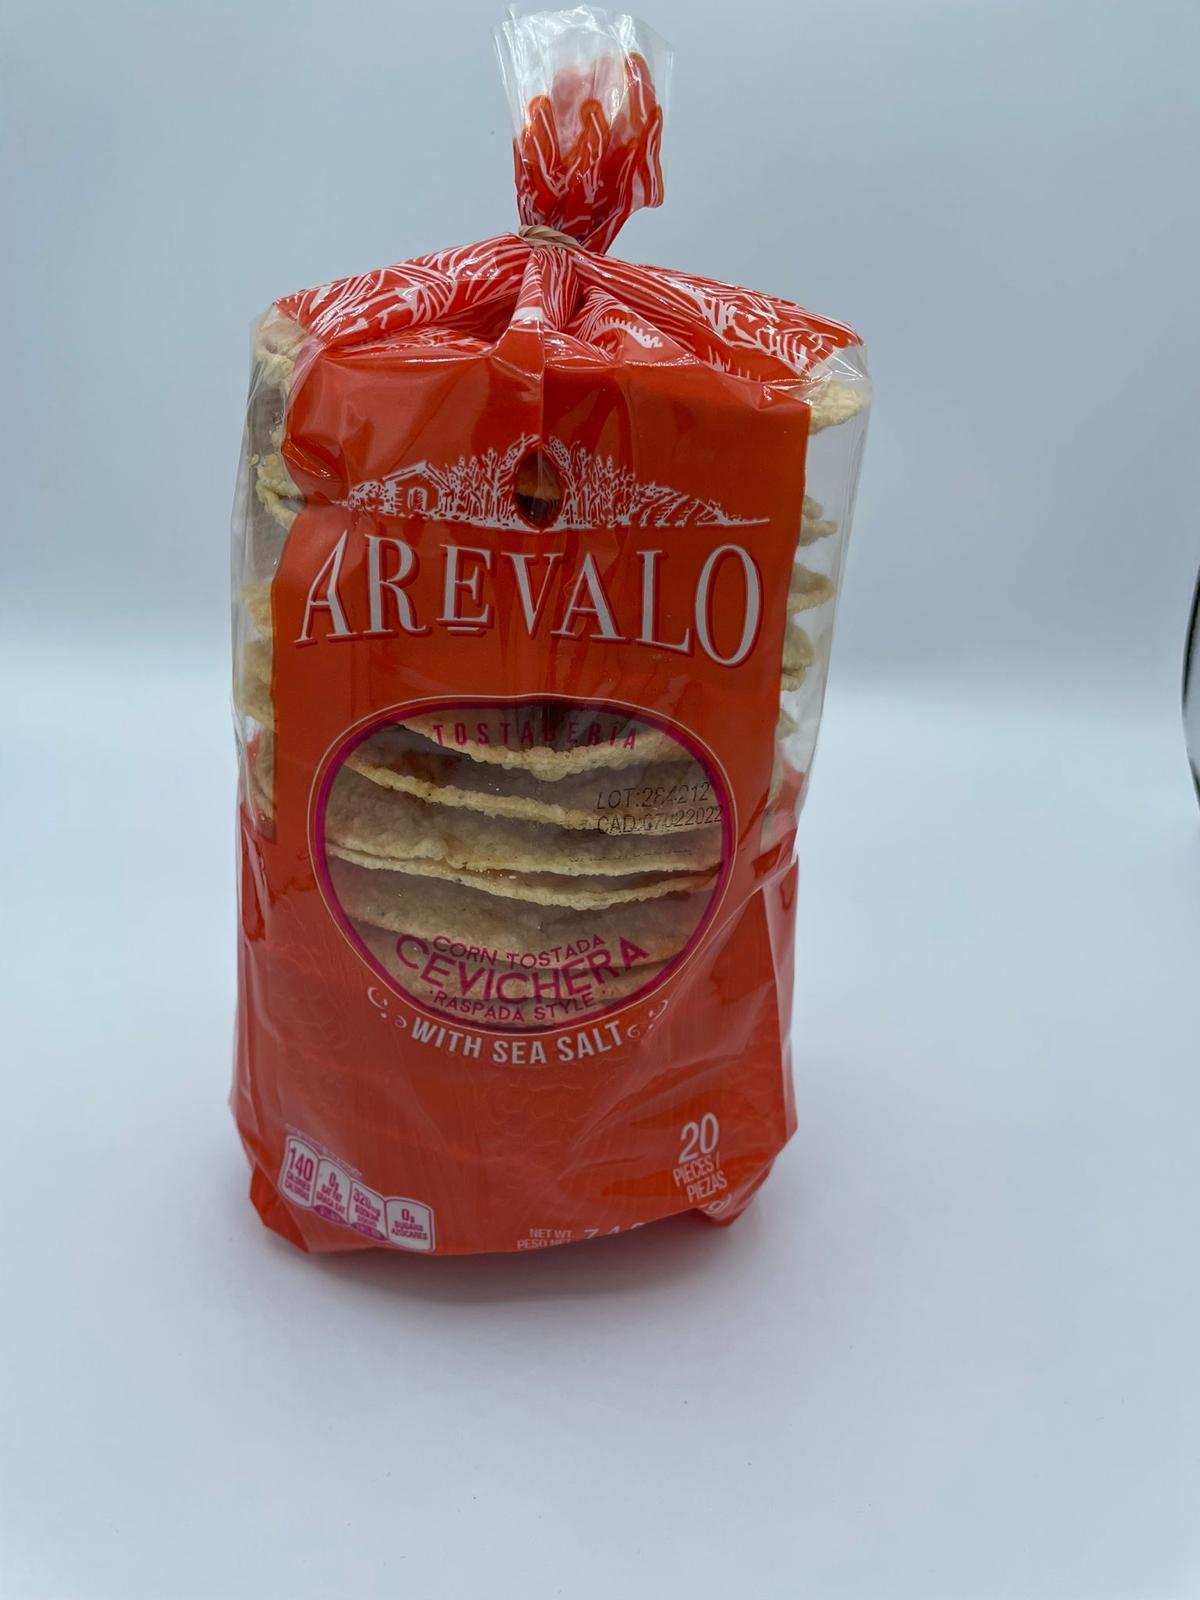 AREVALO Frittierte Maistortillas – Tostadas 210g